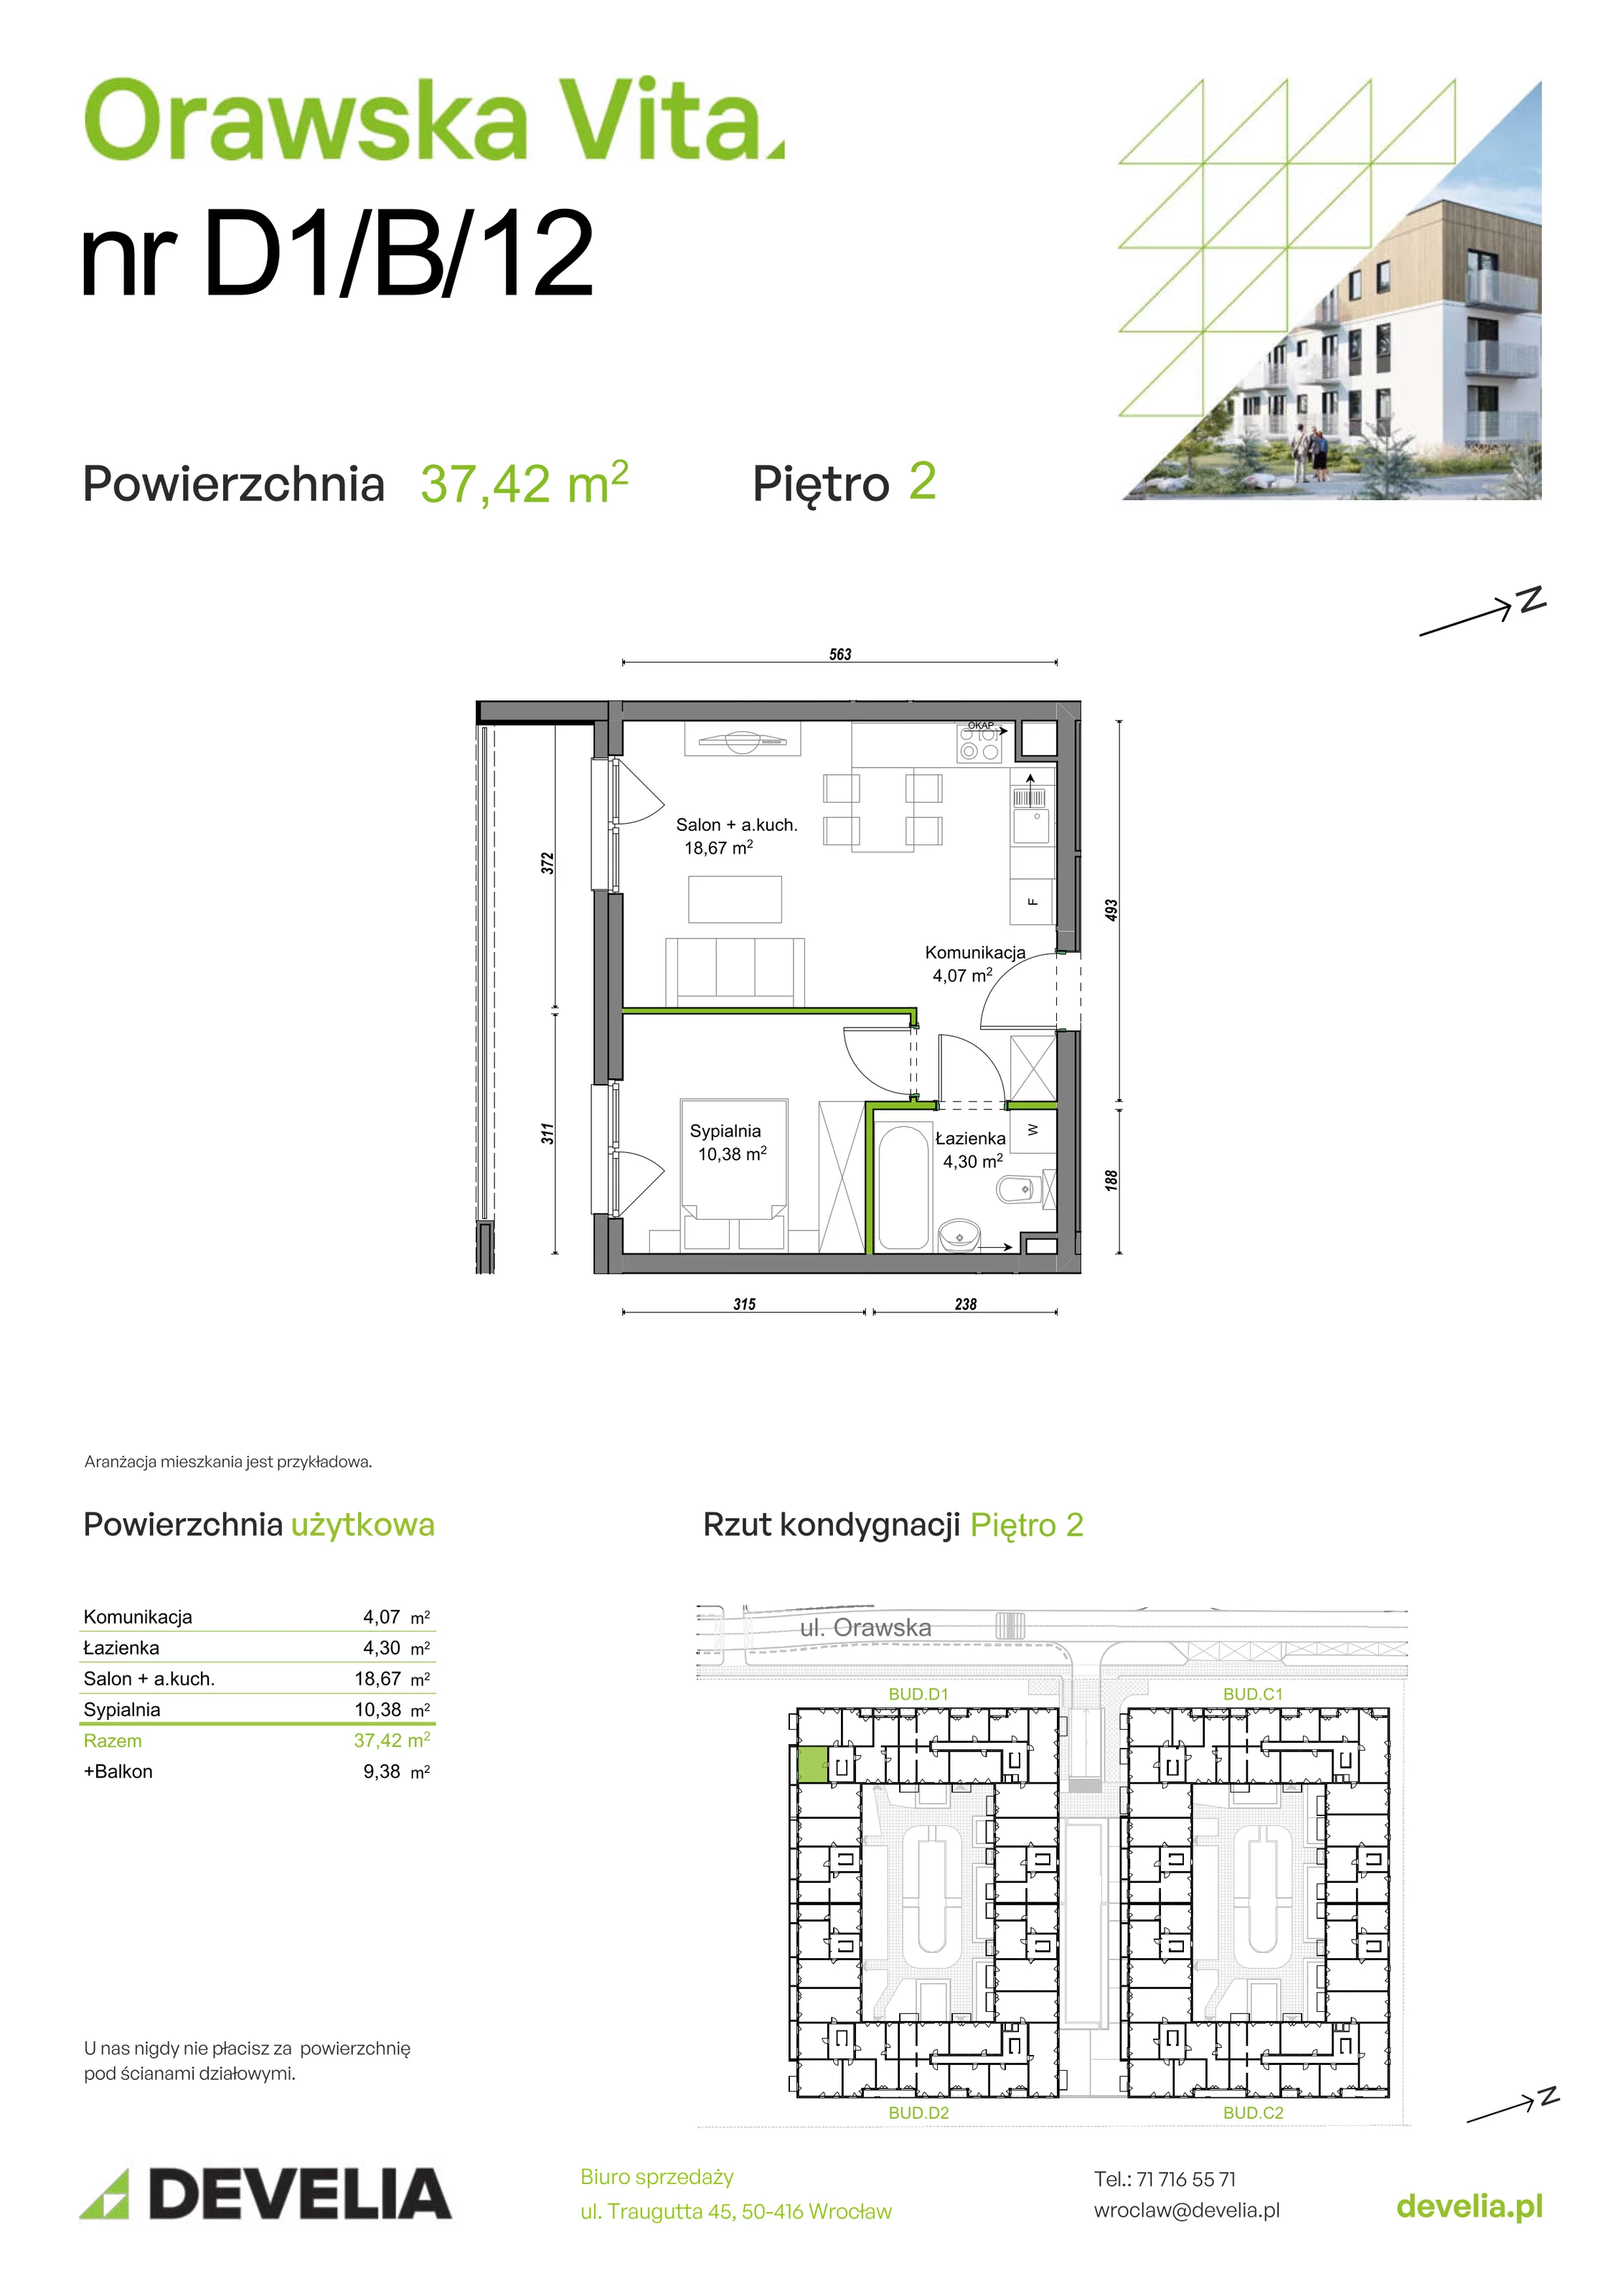 Mieszkanie 37,42 m², piętro 2, oferta nr D1/B/12, Orawska Vita, Wrocław, Ołtaszyn, Krzyki, ul. Orawska 73